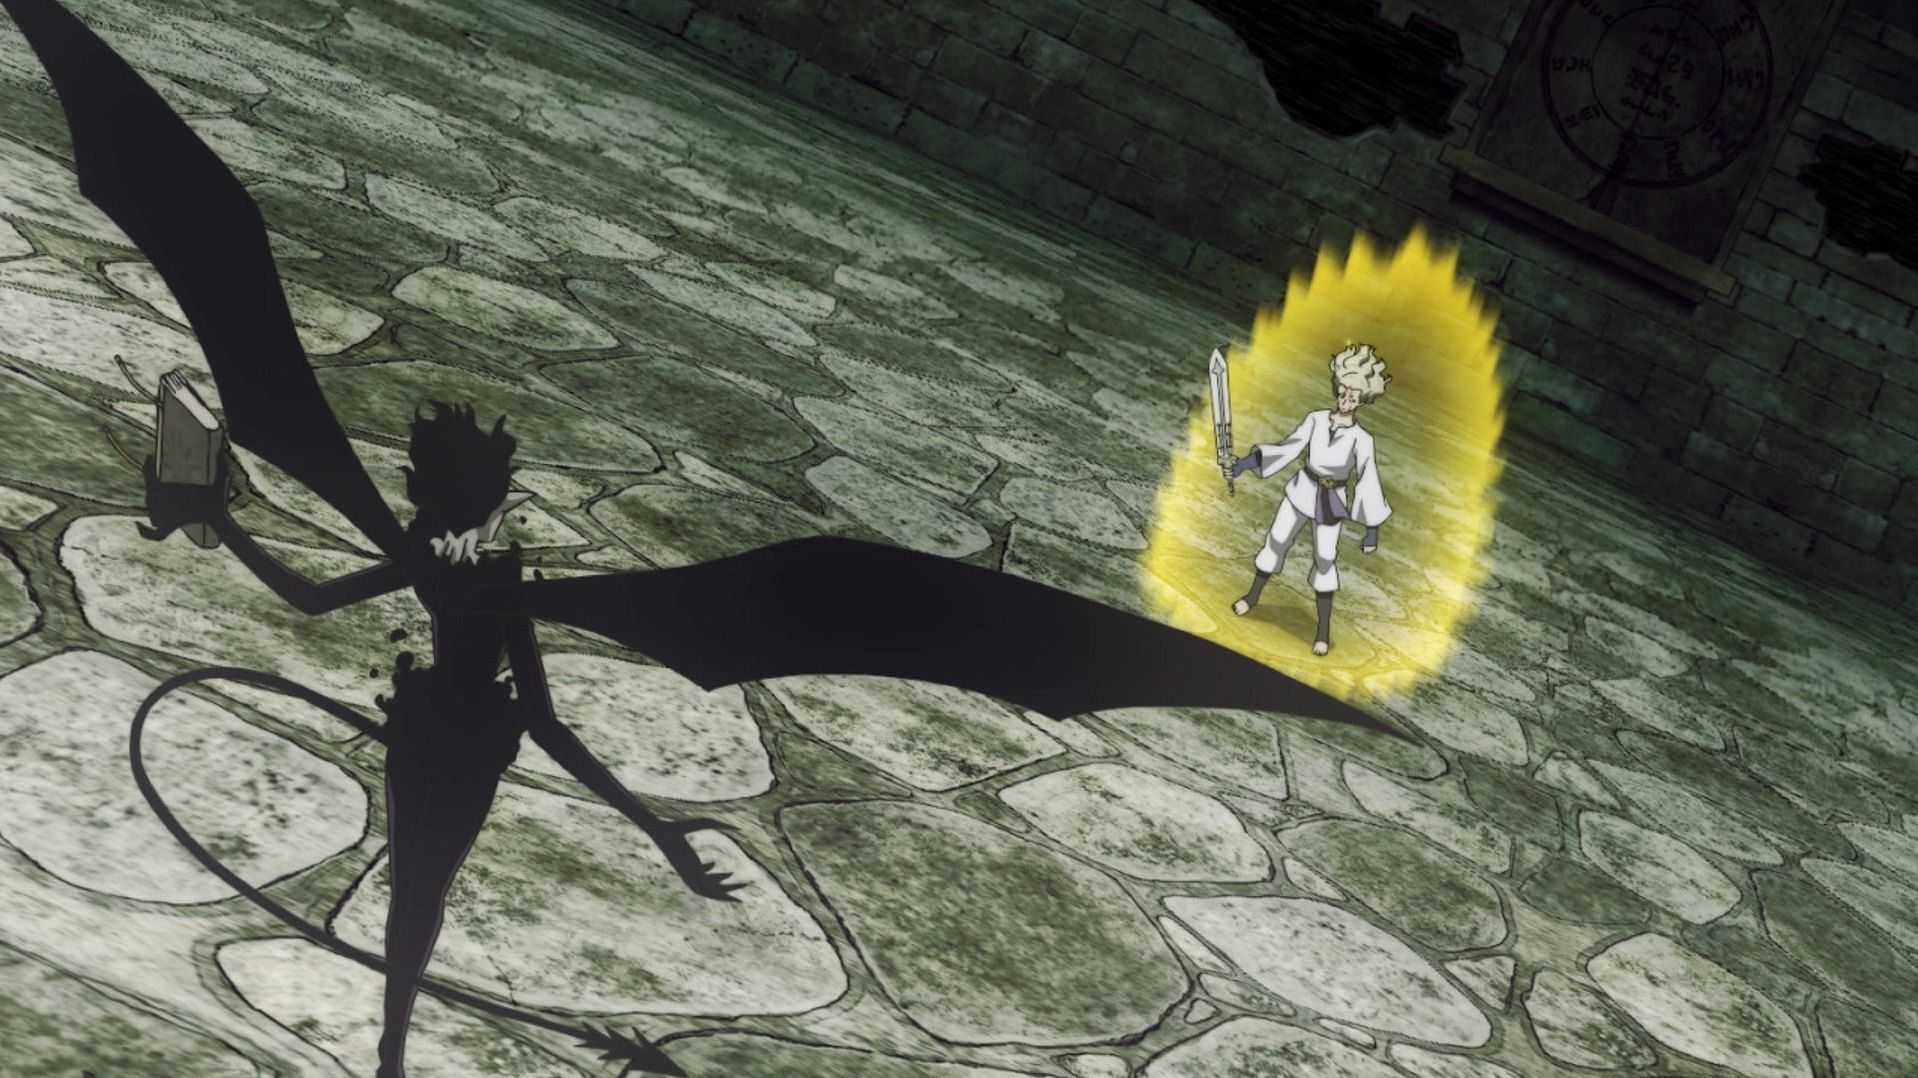 Zagred vs Licht as seen in the anime (Image via Studio Pierrot)